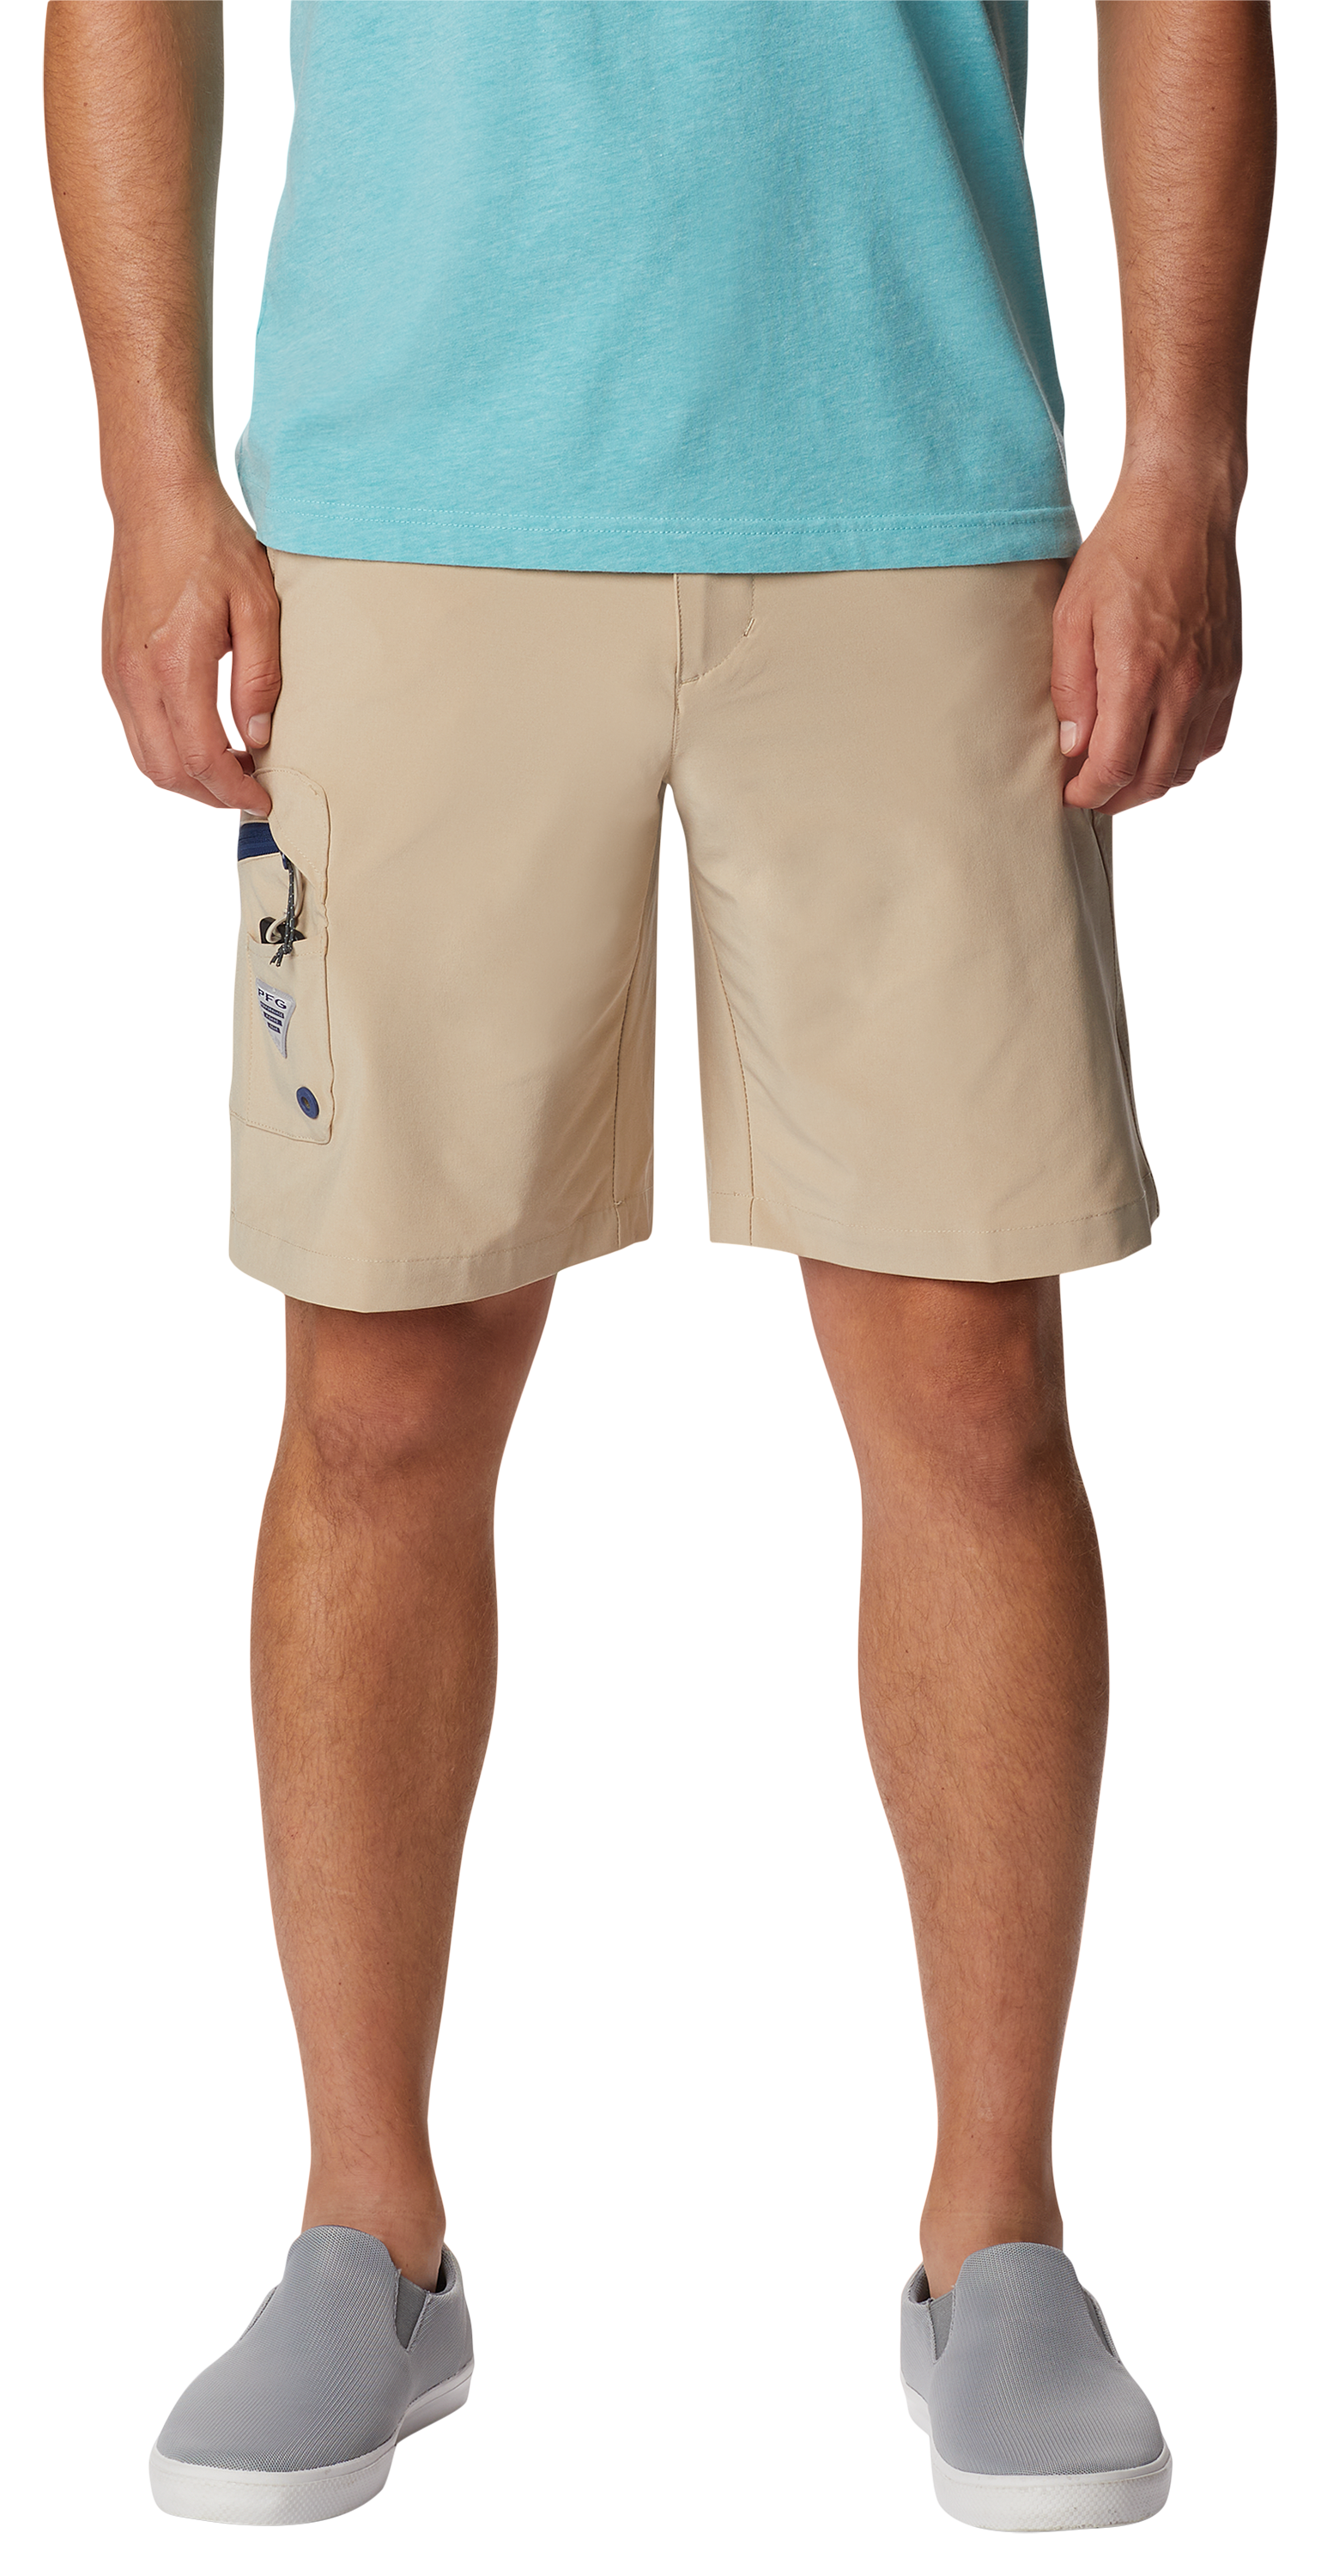 Columbia fishing shorts mens - Gem